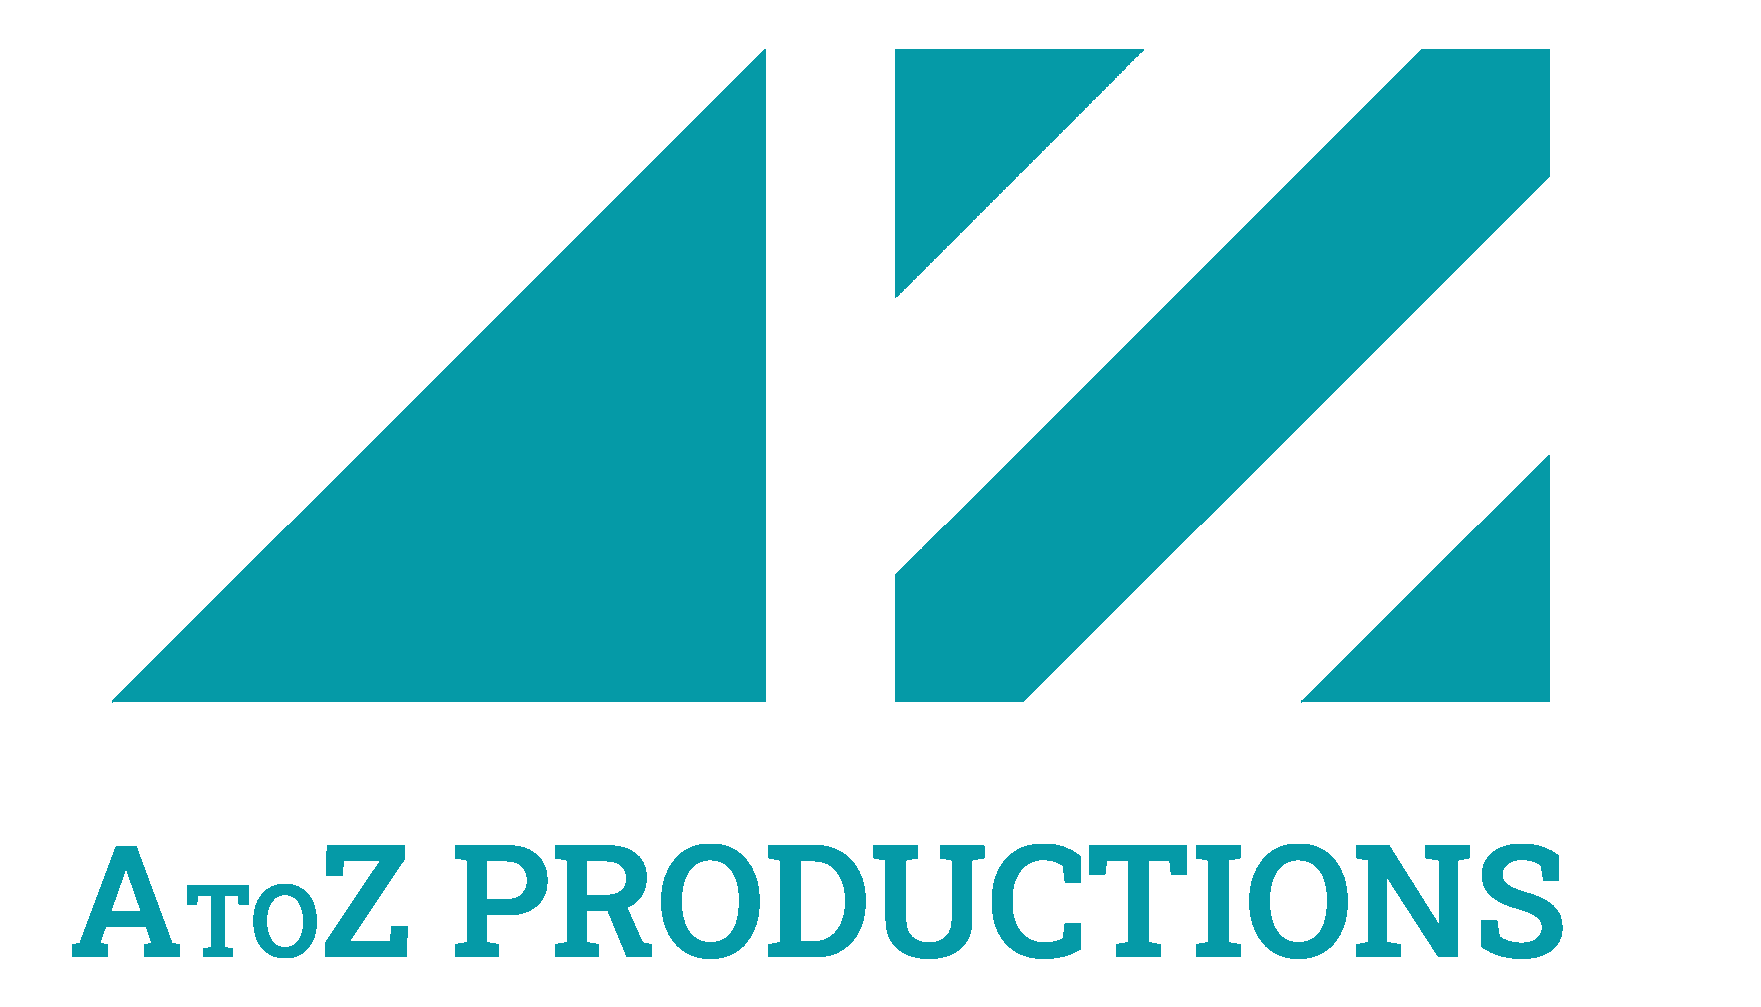 AtoZ PRODUCTIONS